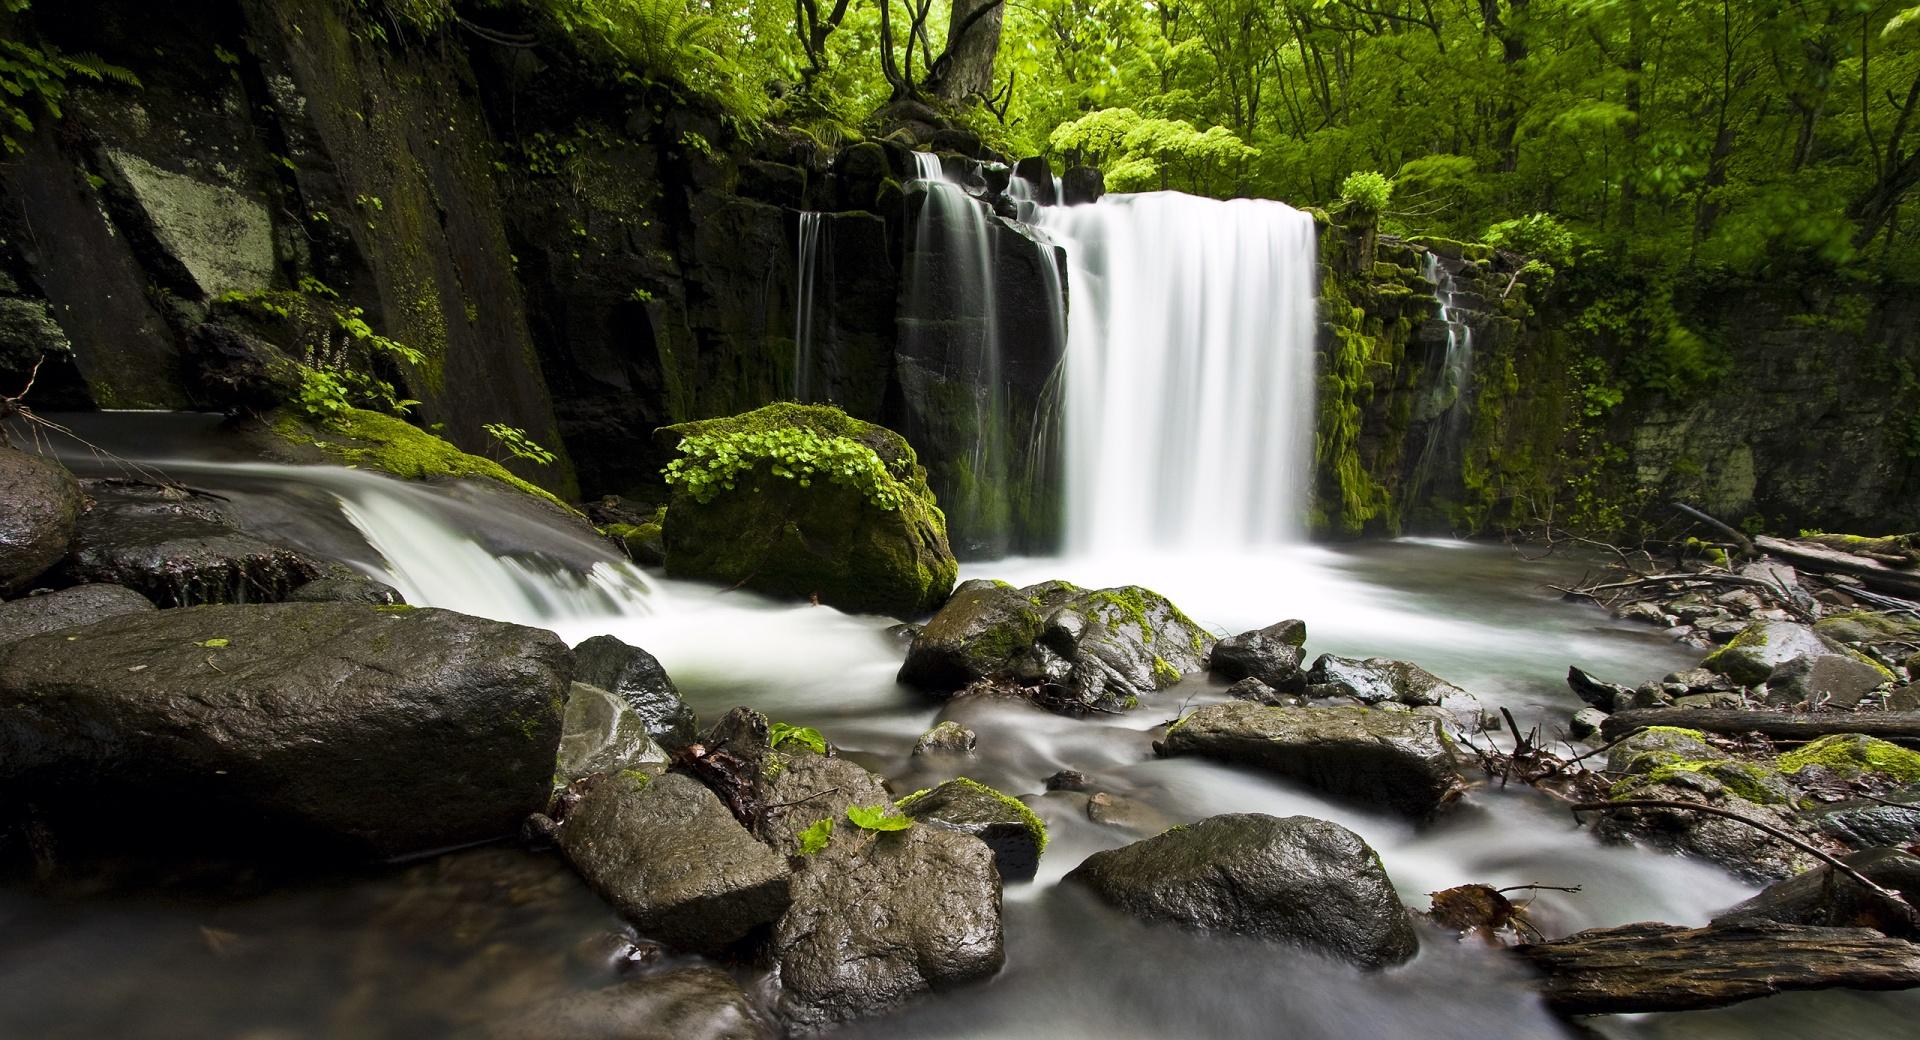 Beautiful Waterfall Scenery at 2048 x 2048 iPad size wallpapers HD quality